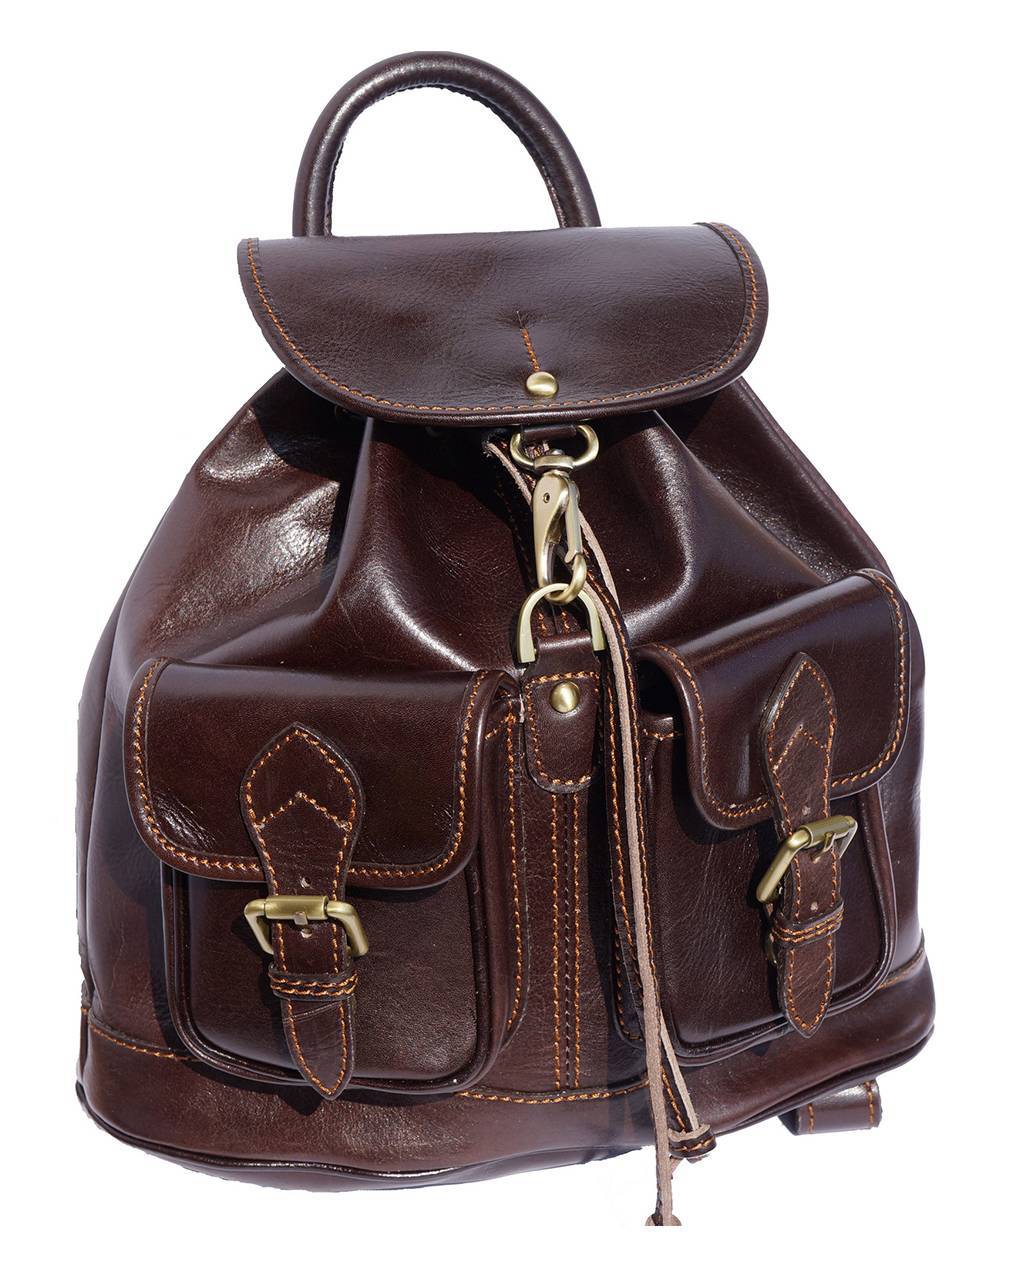 Wholesale Italian handbags: Italian manufacturers brands of leather bags